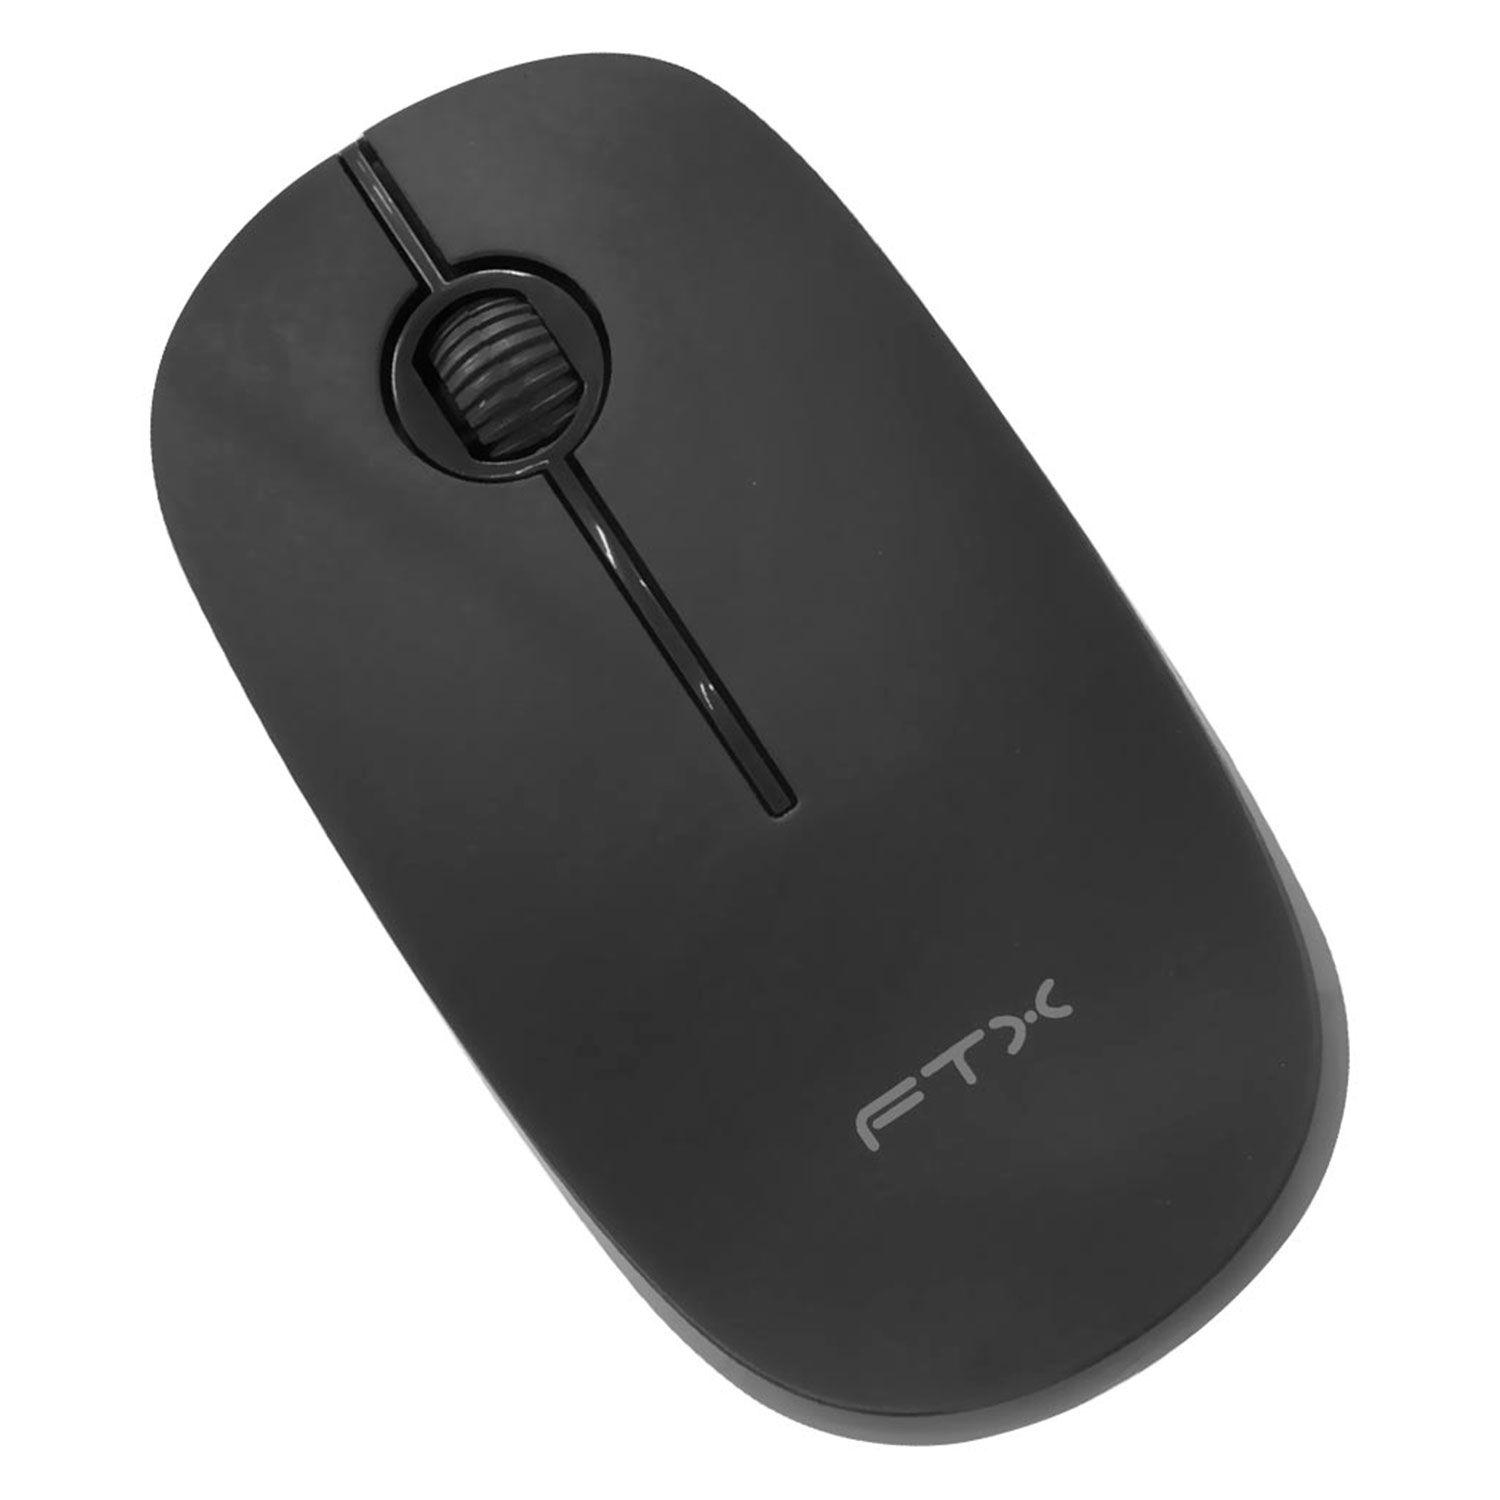 Kit Teclado e Mouse FTX GK600 Wireless Português - Preto